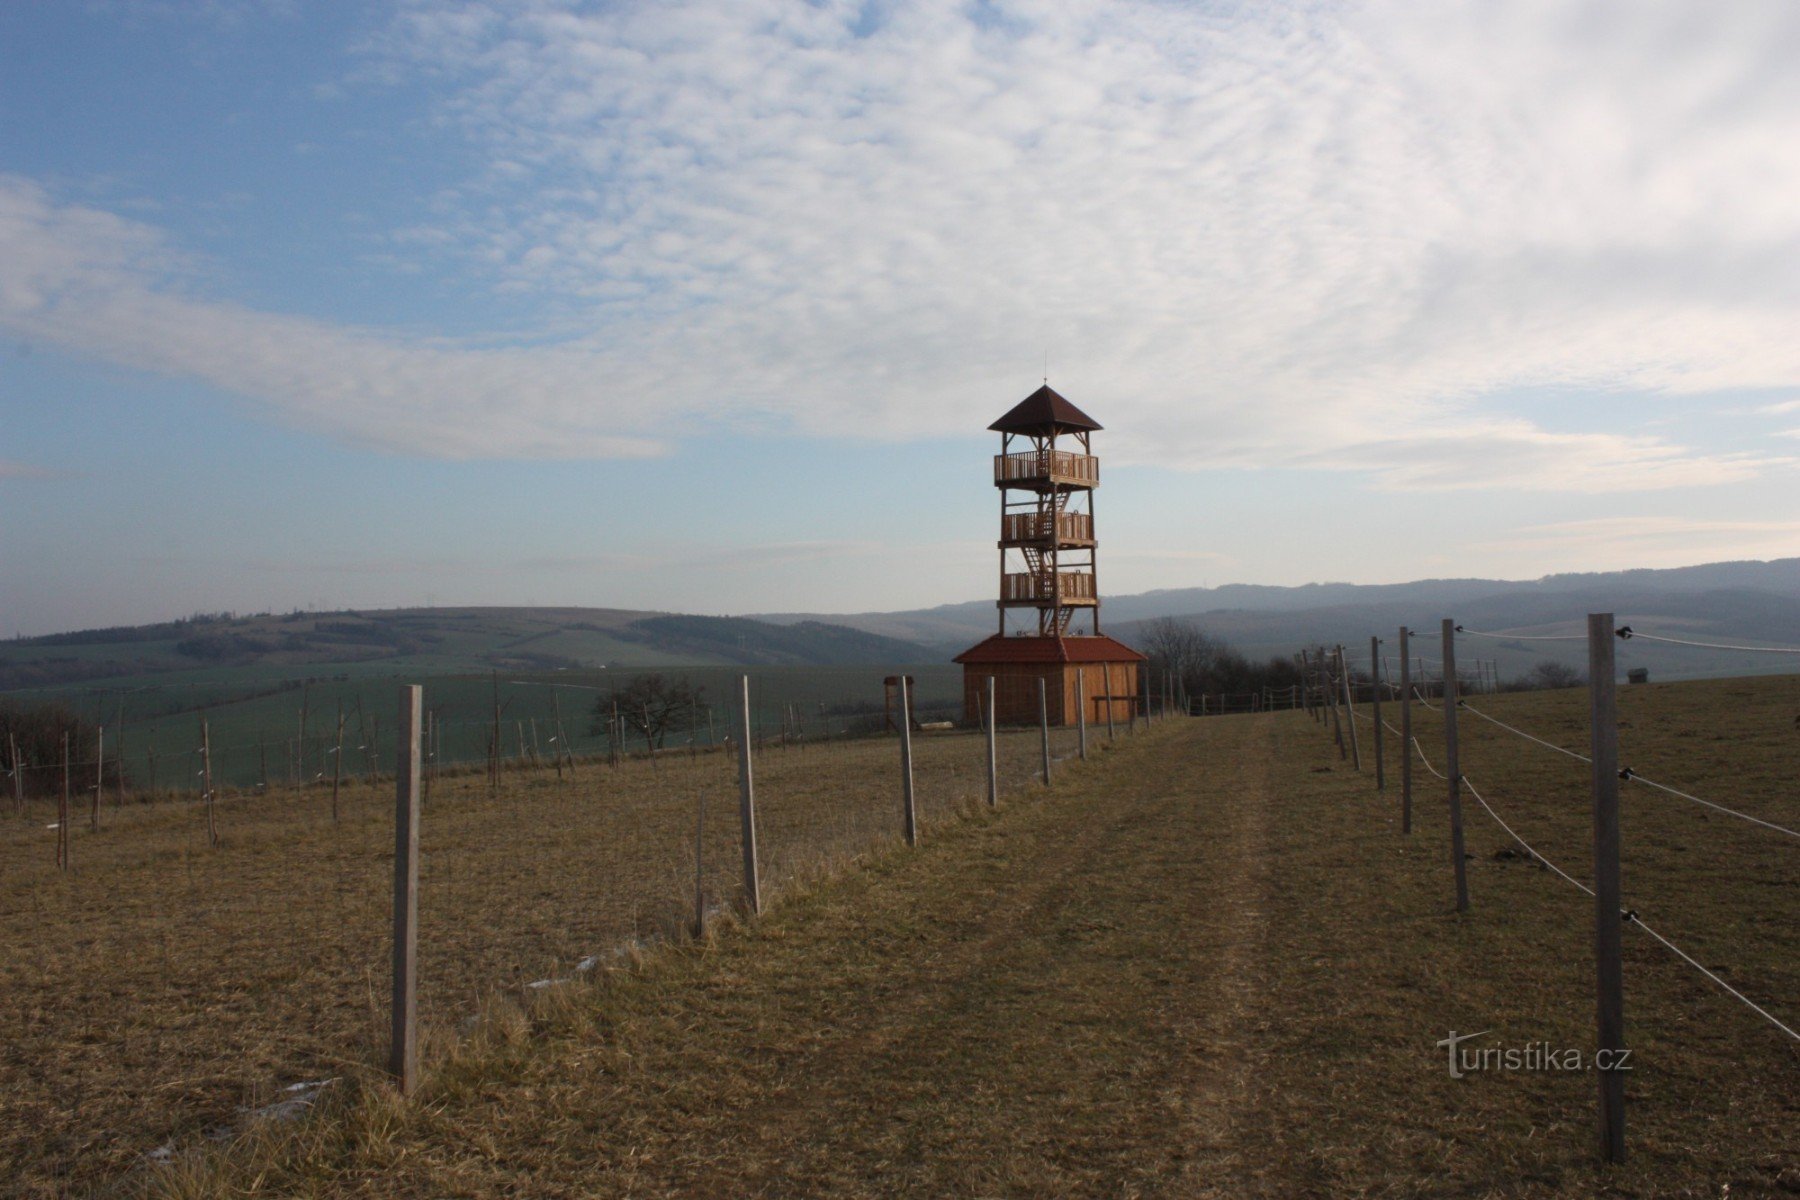 Torre panoramica Zdenička nella regione di Kroměříž